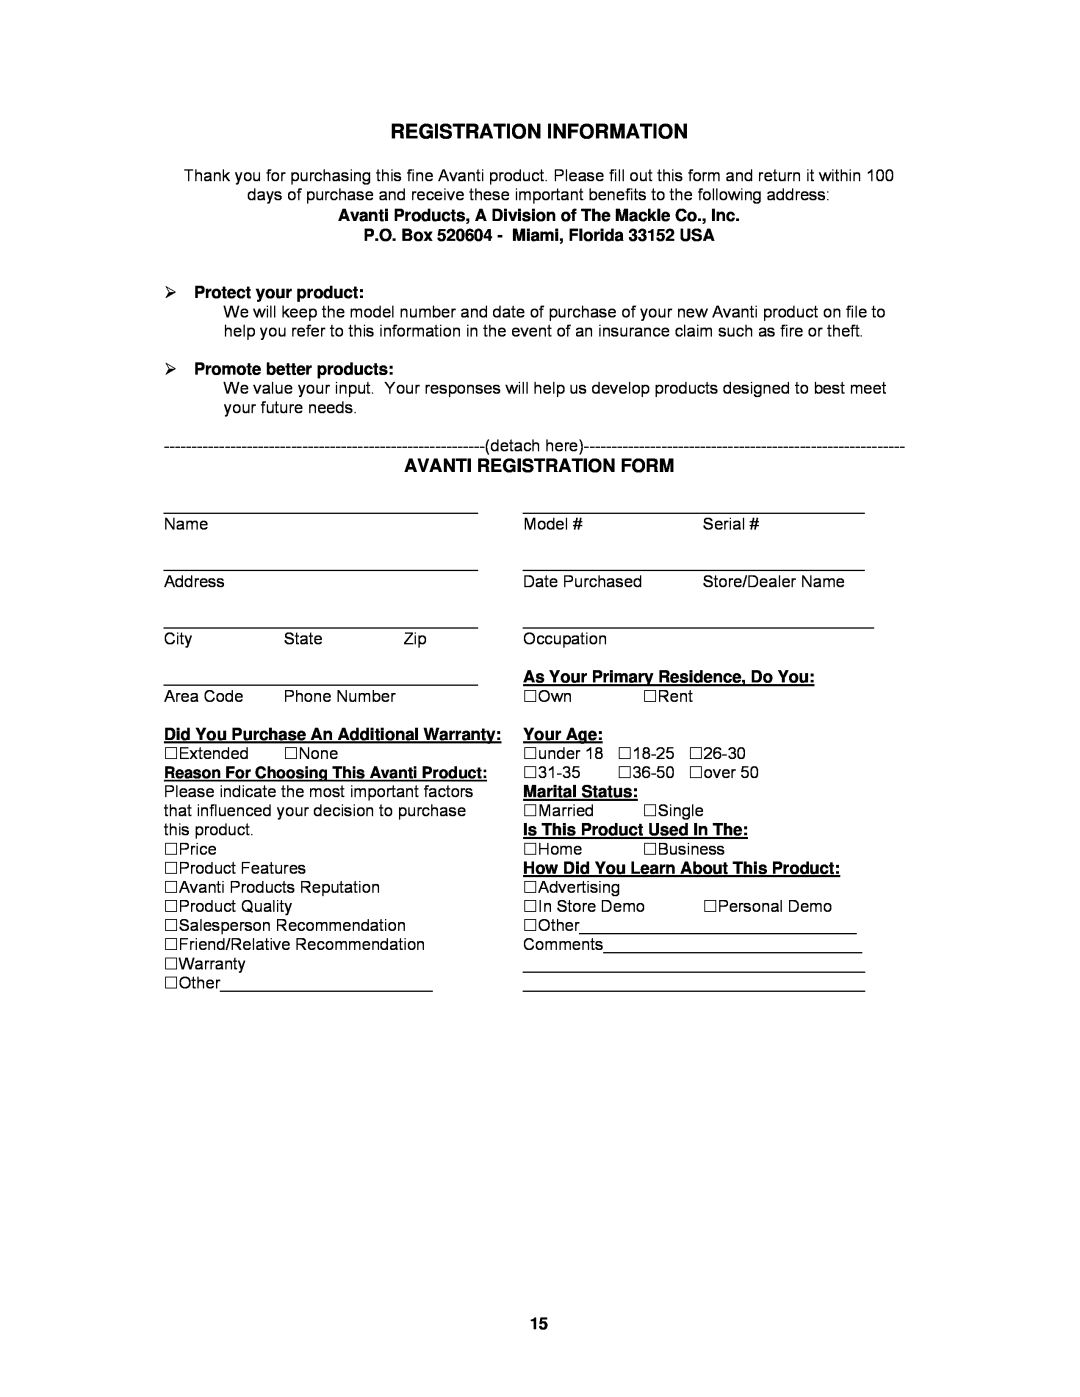 Avanti EWC18DZ Registration Information, Avanti Registration Form, P.O. Box 520604 - Miami, Florida 33152 USA, Your Age 